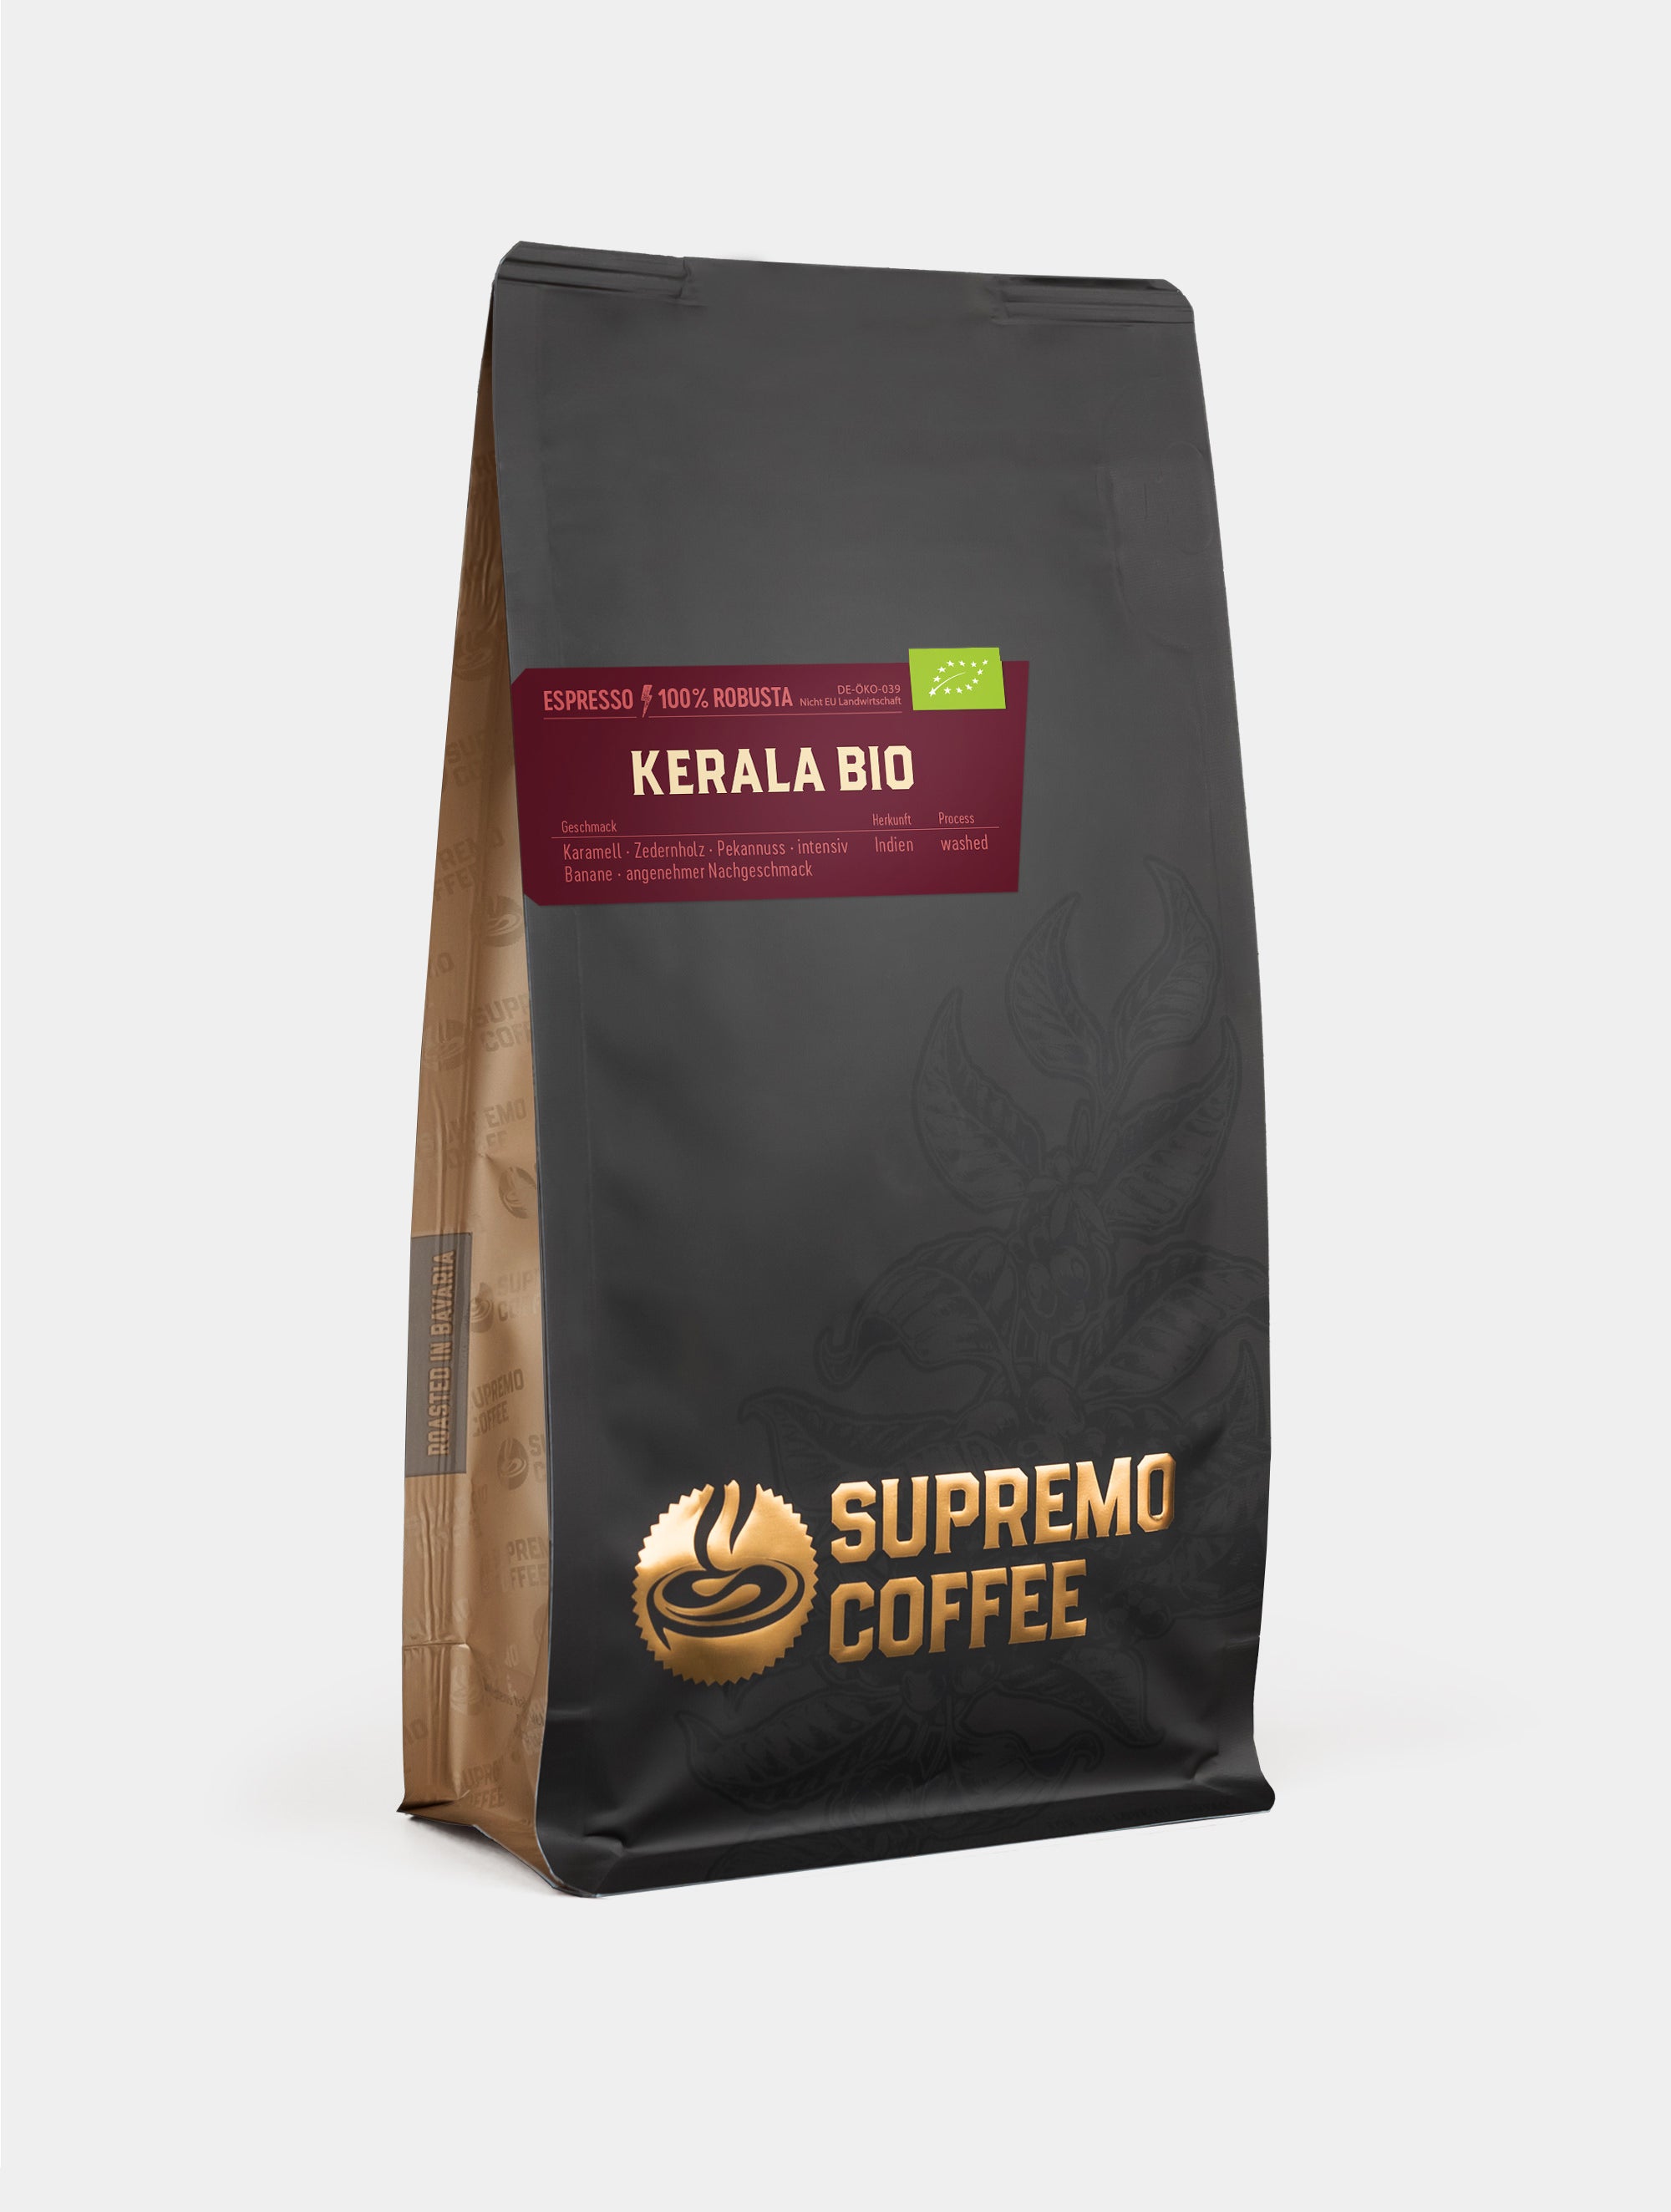 Kerala Bio, Indien | SUPREMO Coffee